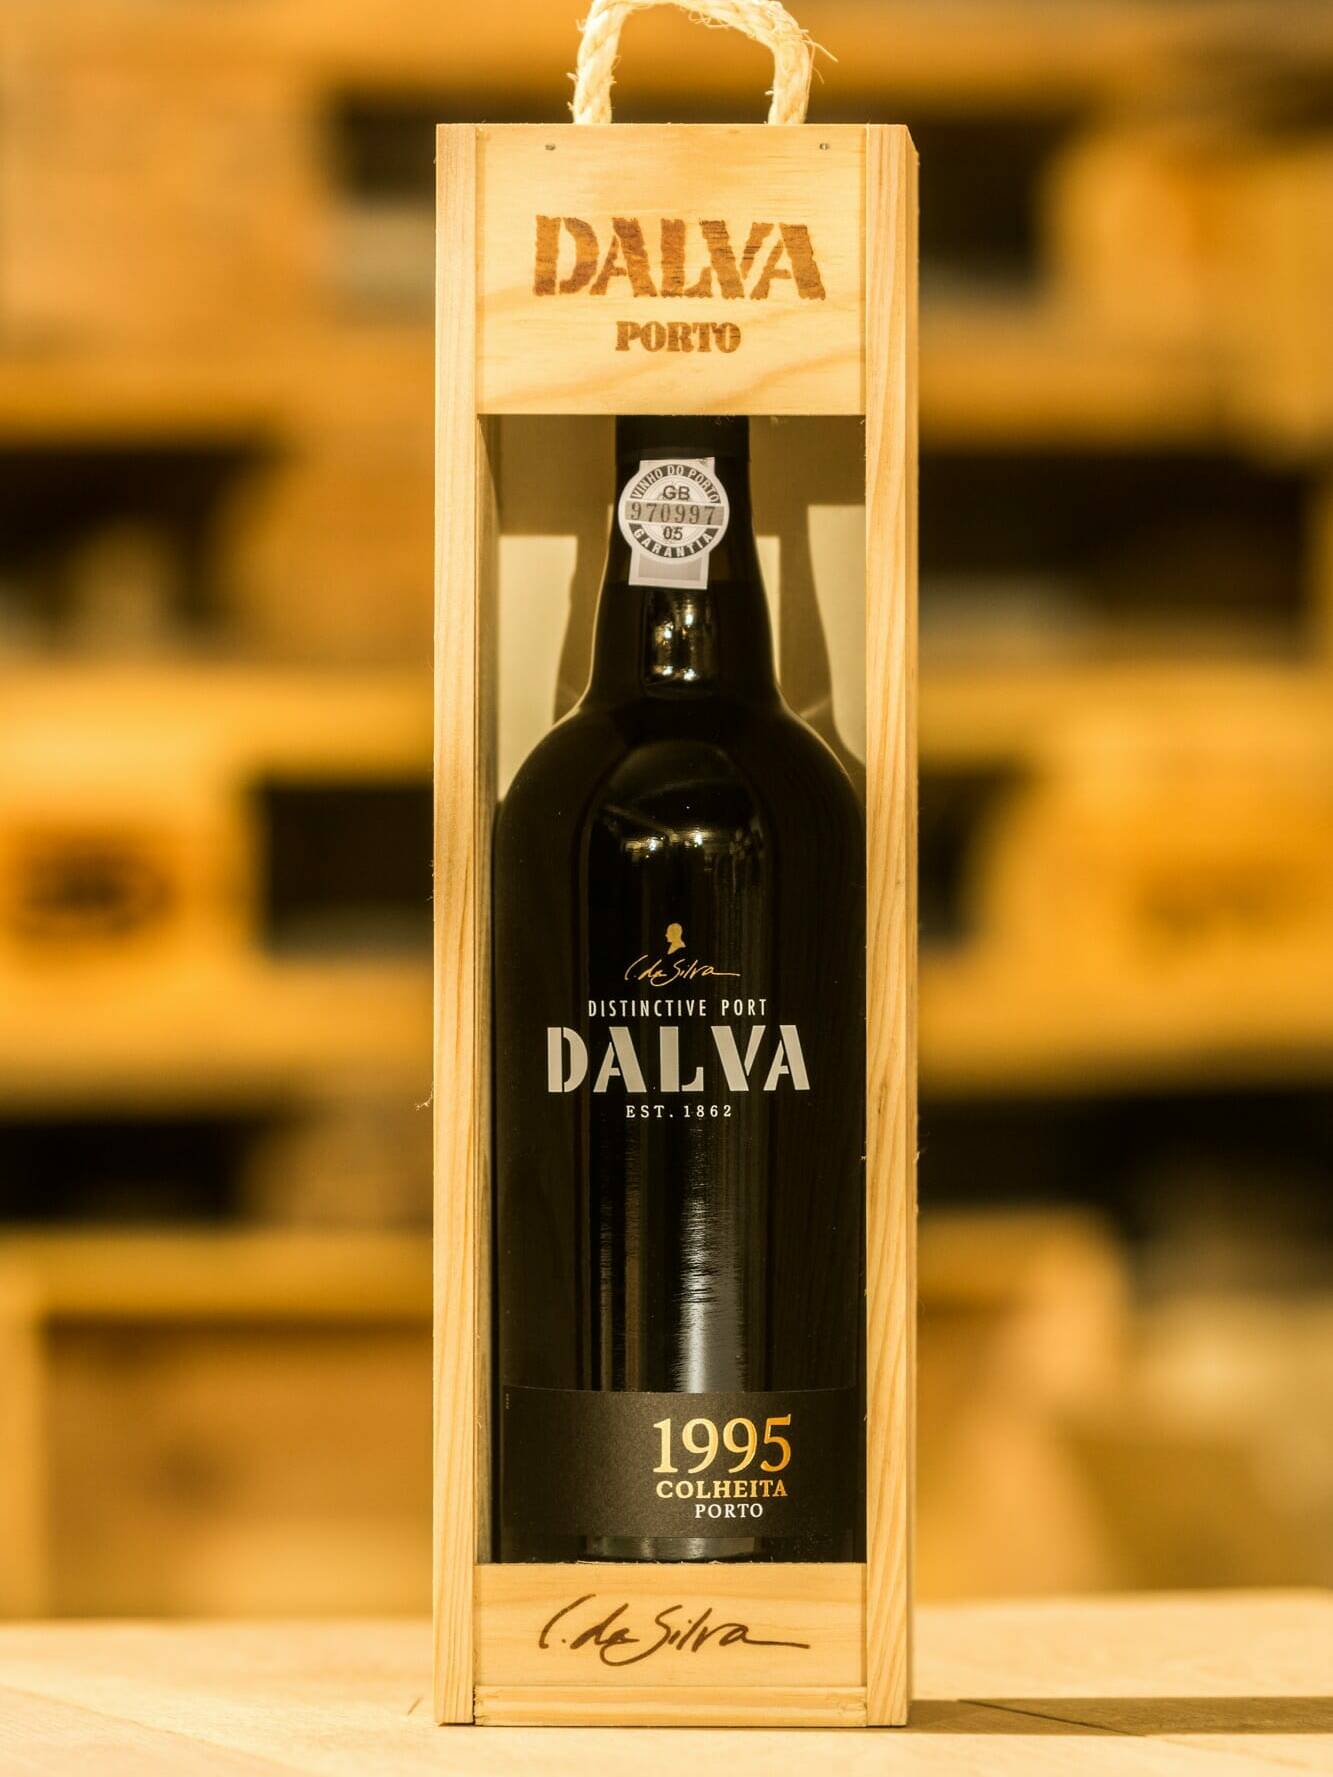 C. da Silva Dalva Colheita Port 1995